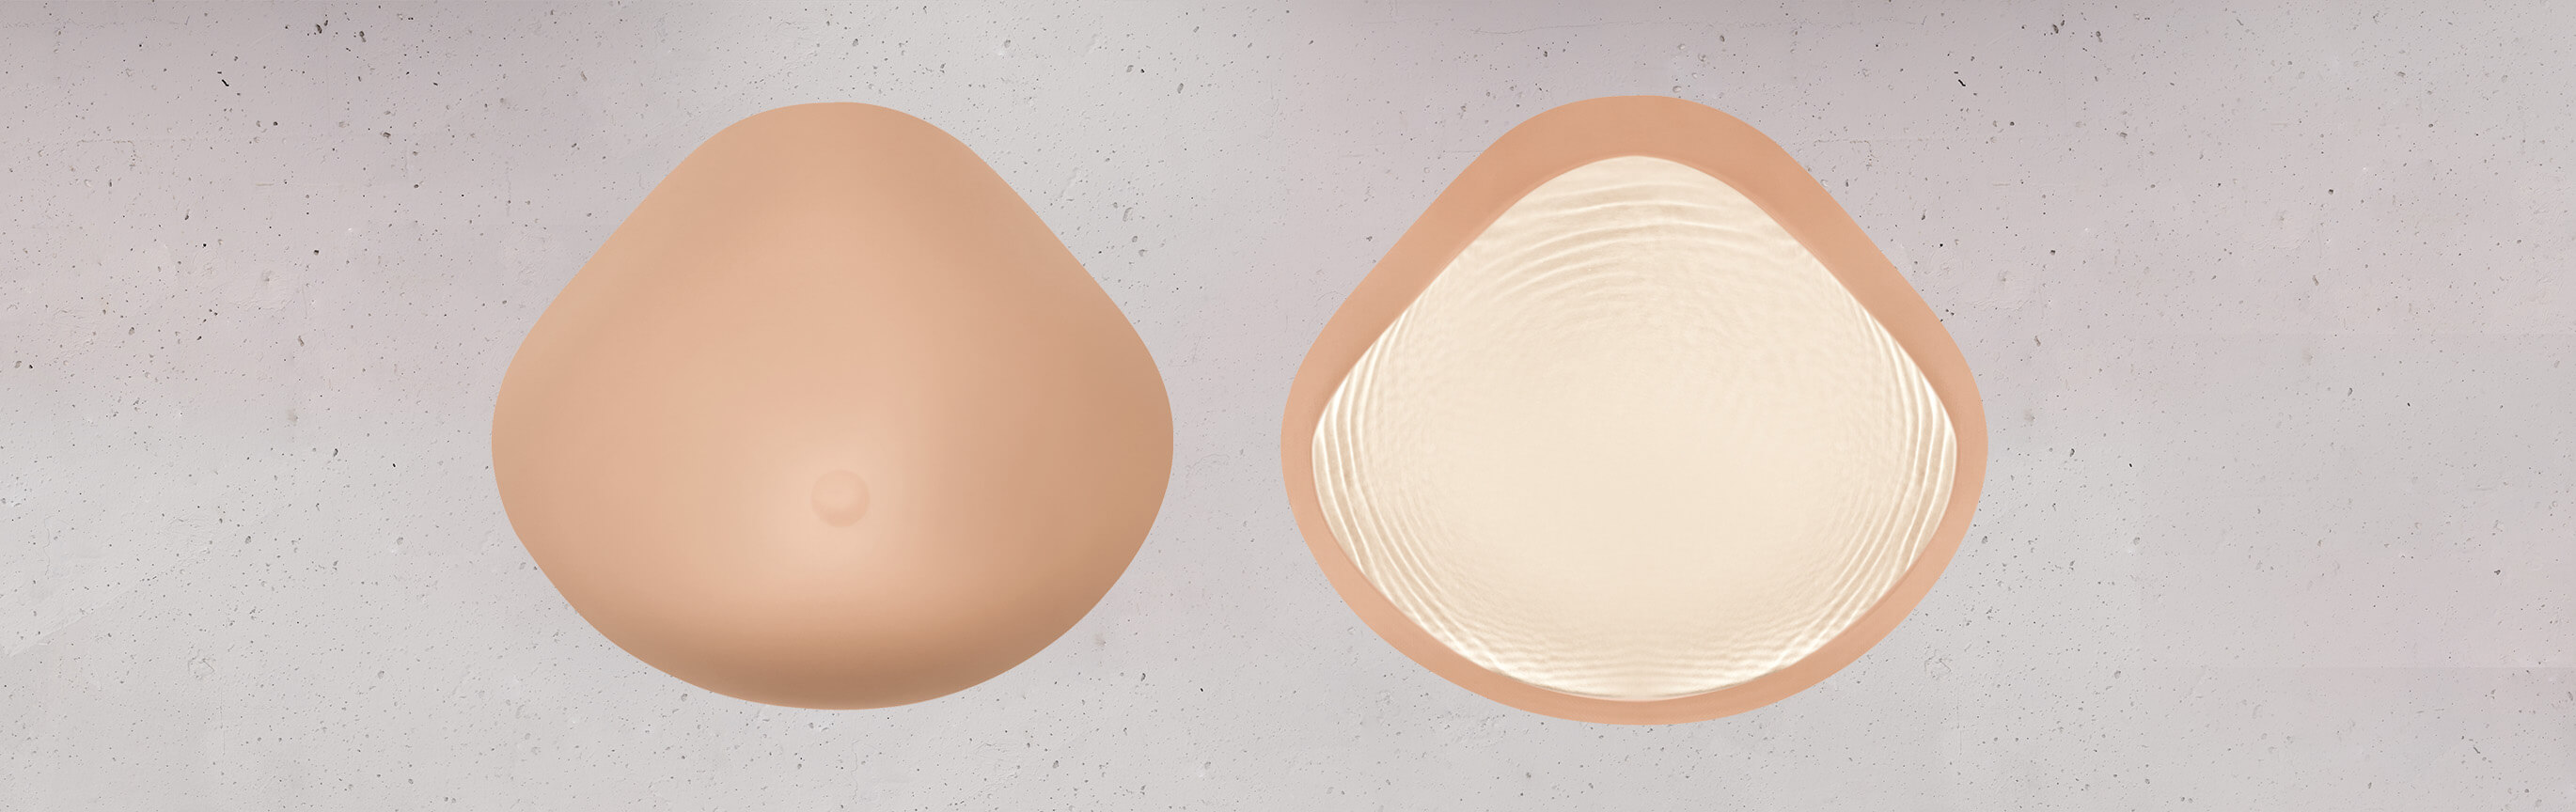 Natura Cosmetic Breast Form - Desktop